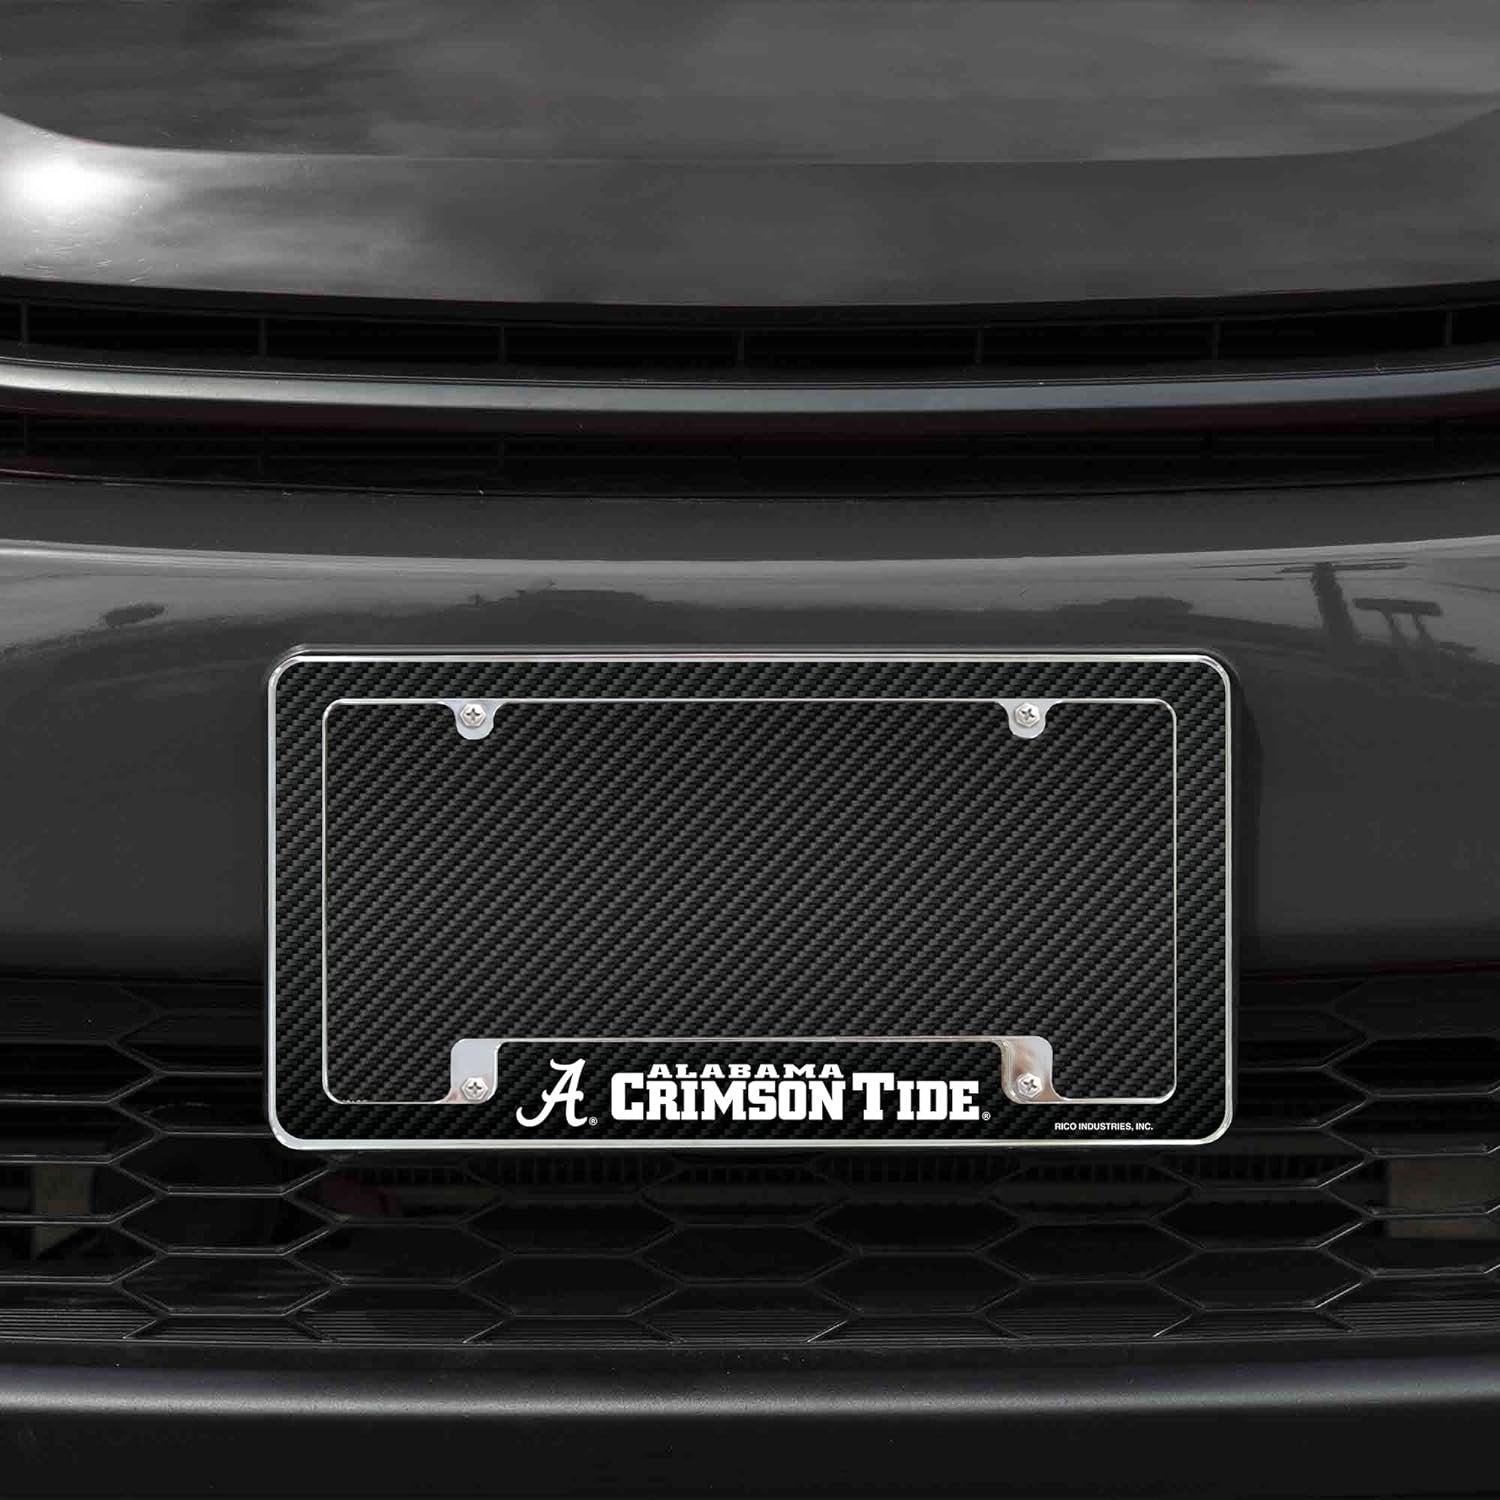 University of Alabama Crimson Tide Metal License Plate Frame Chrome Tag Cover 12x6 Inch Carbon Fiber Design